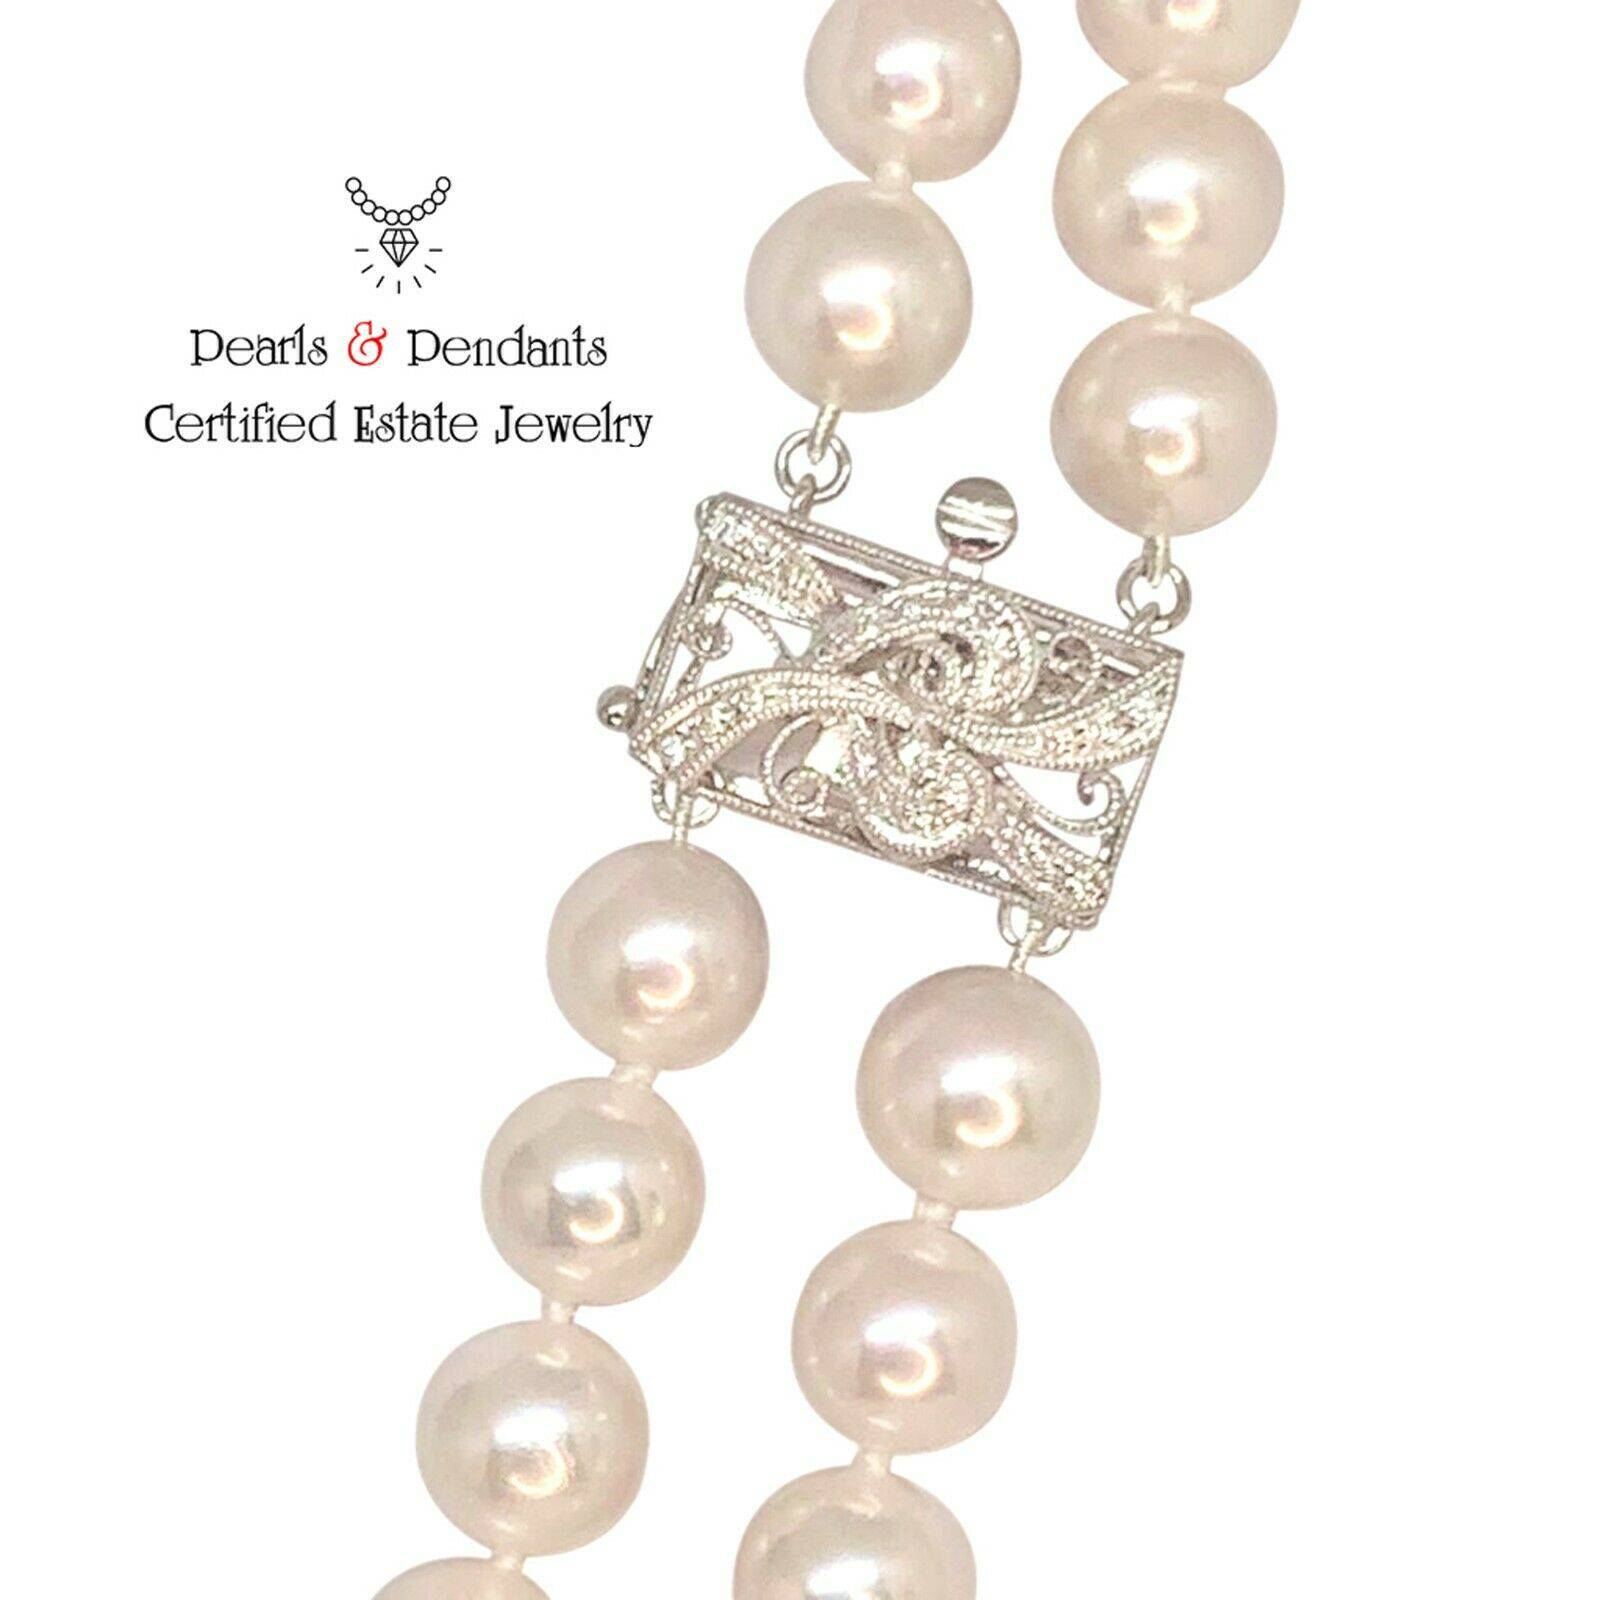 Diamond Akoya Pearl Necklace 8.20 mm 14k Gold 19" 2-Strand Certified $11,950 010260 - Certified Estate Jewelry